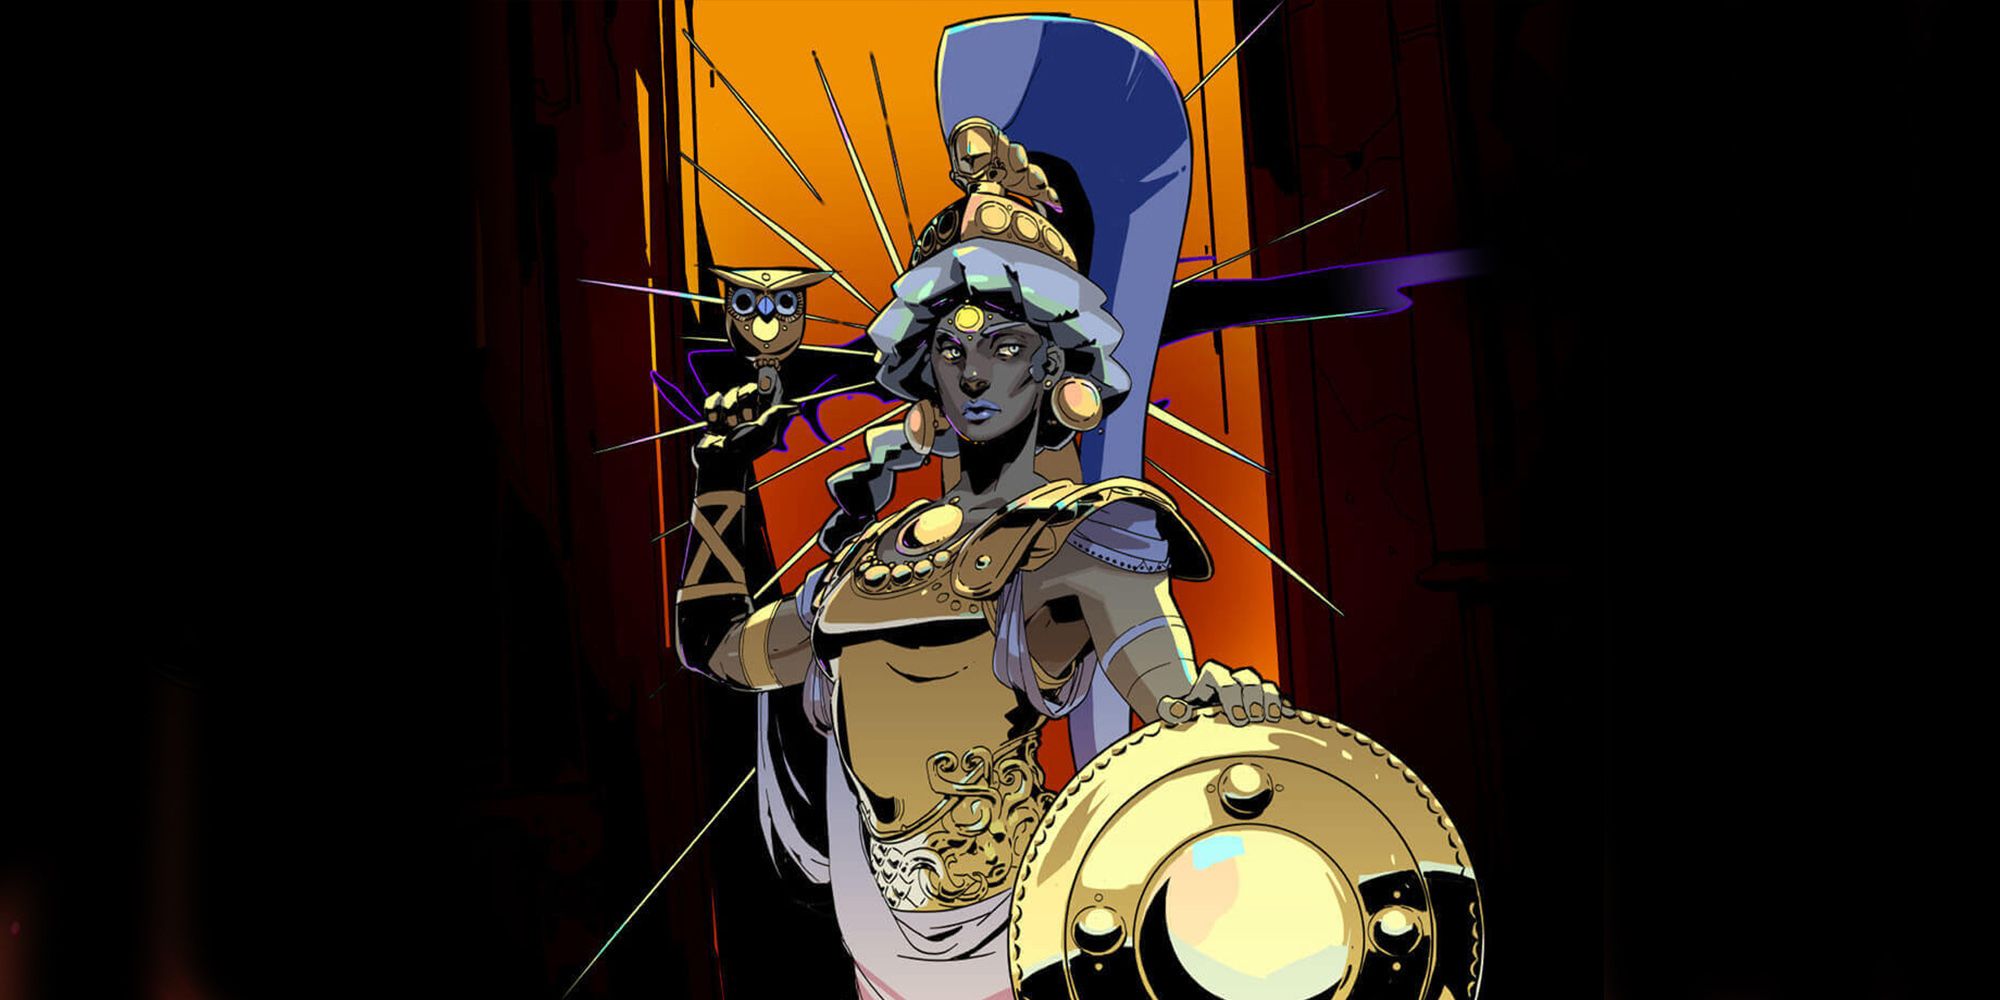 Hades - Splash Art Of Athena Against A Black Background